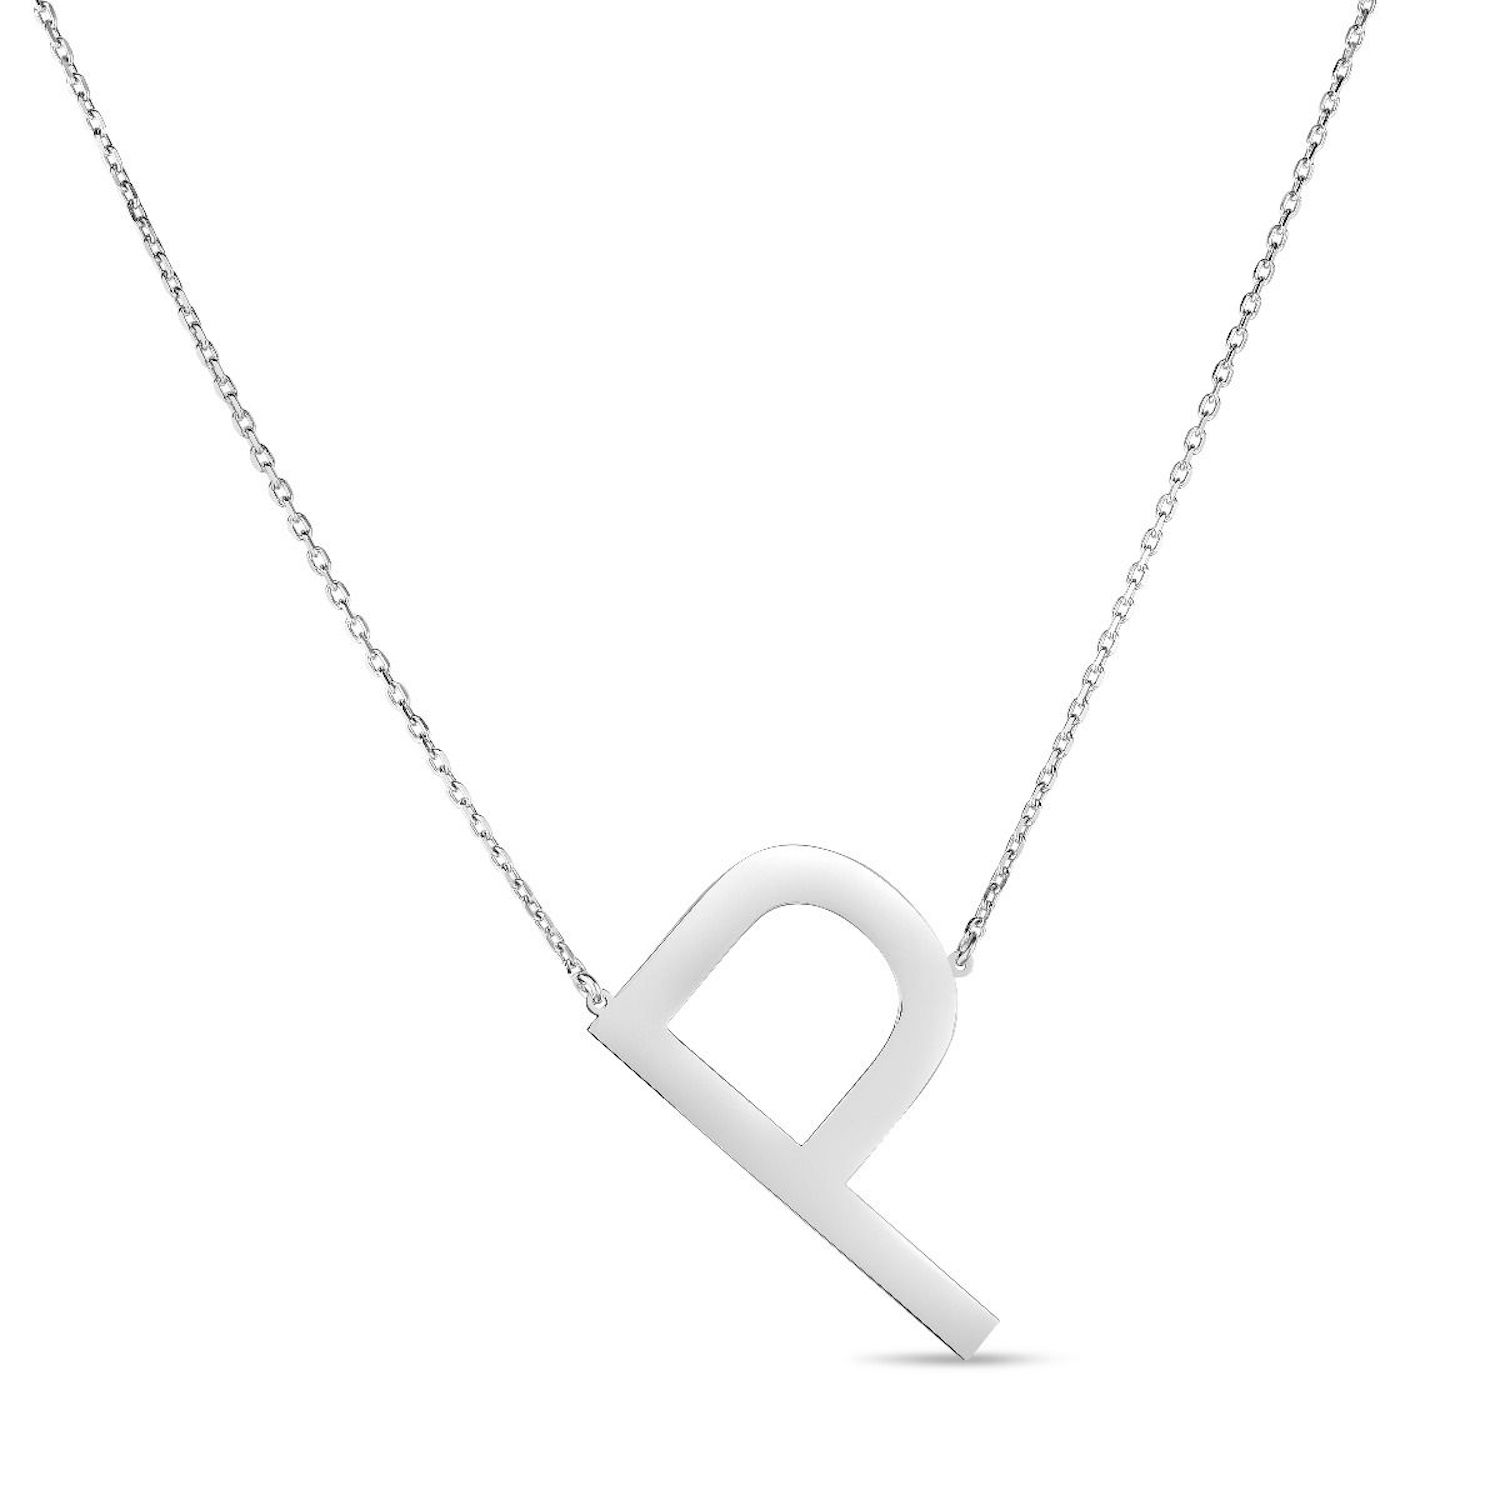 Sterling Silver Sideways Initials Letter Pendant Necklace 16"-18" Adj. 1.5" - P